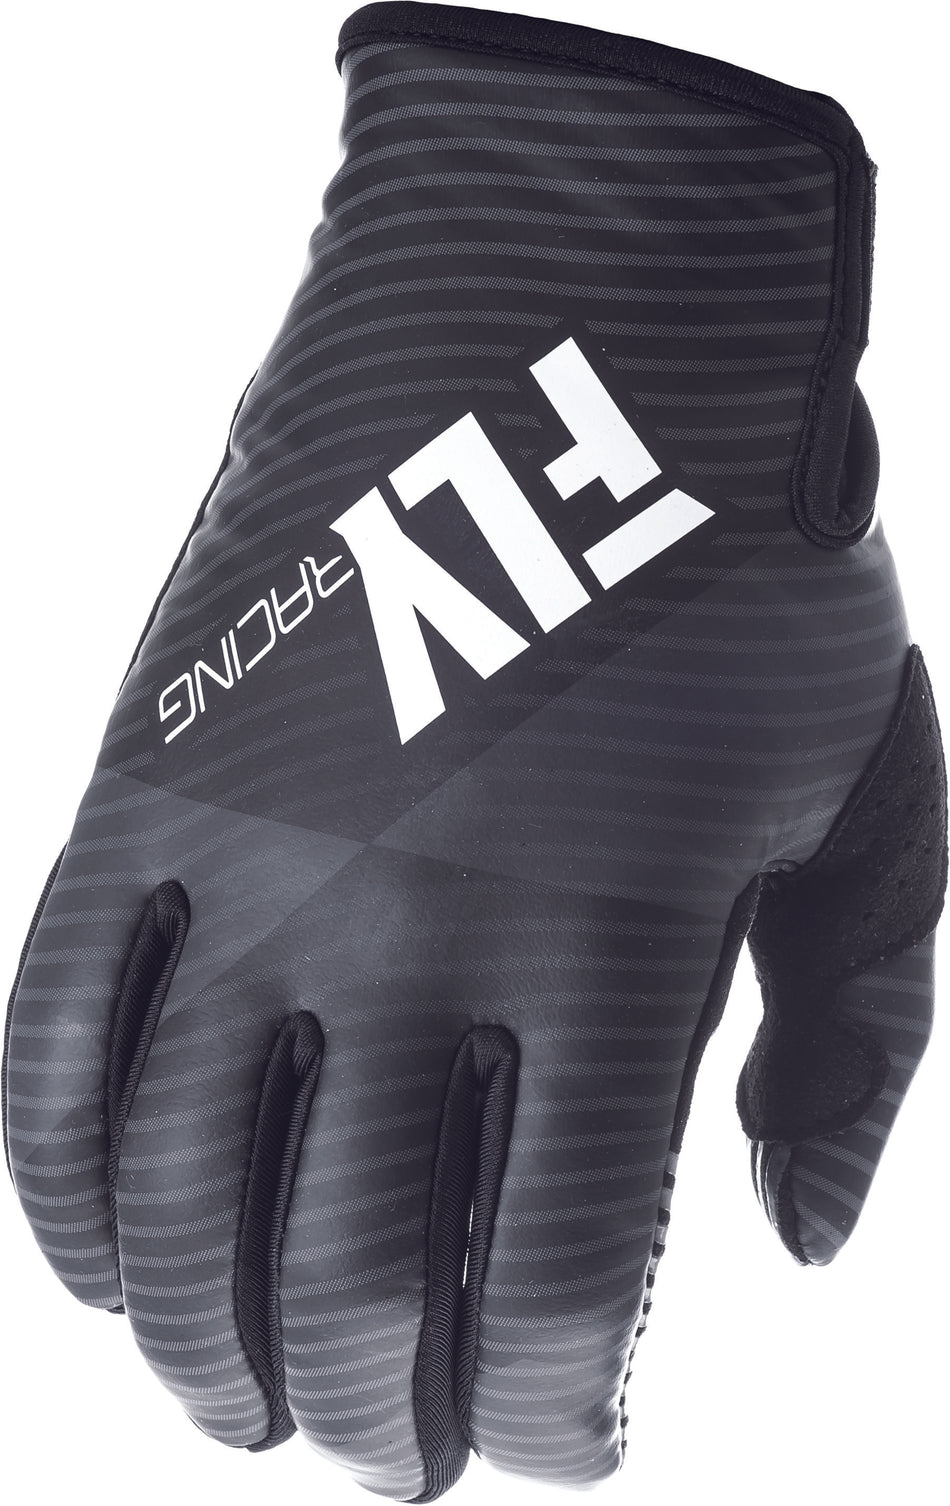 FLY RACING 907 Neoprene Gloves Black/Grey Sz 6 369-64006